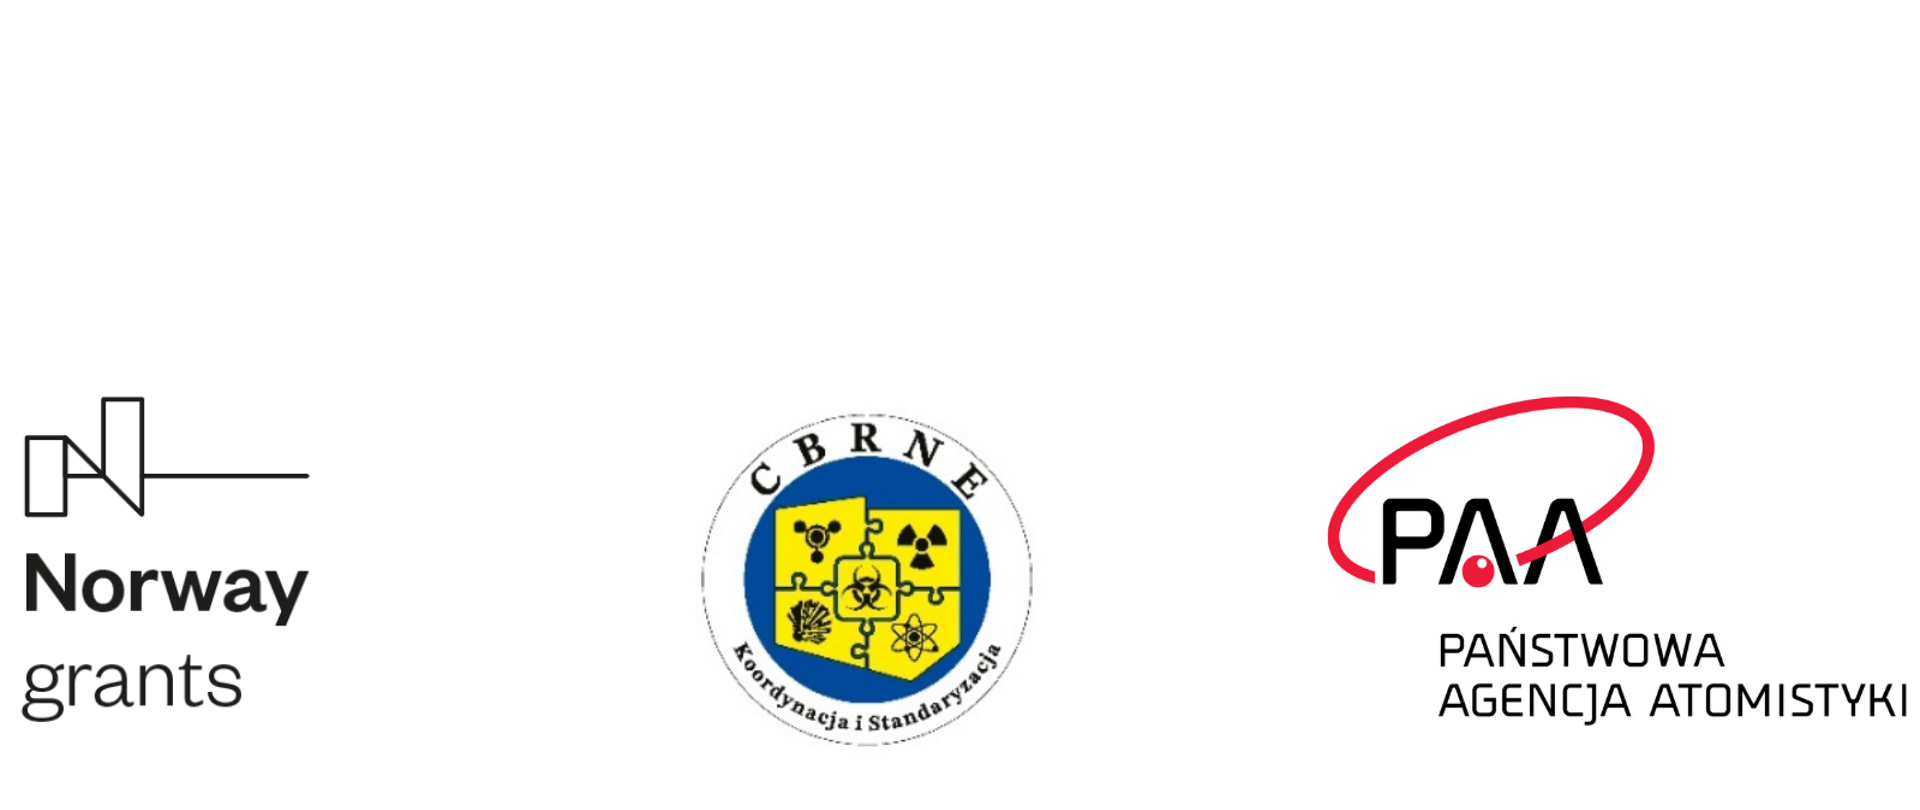 Logo Norway grants, CBRNE, PAA